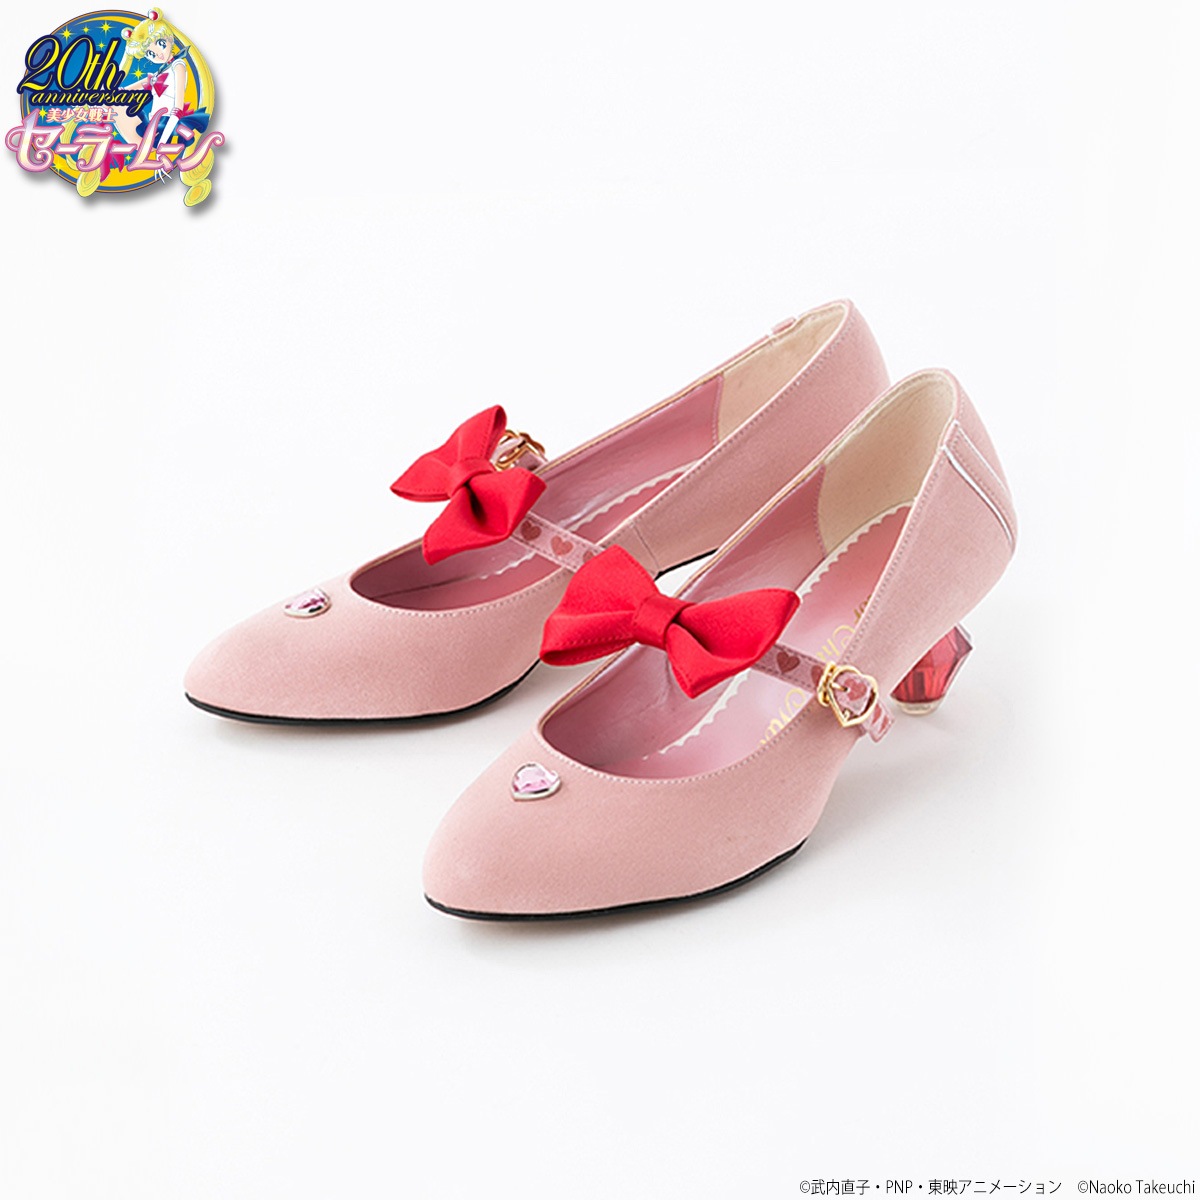 Sailor Moon x Tyake Tyoke Shoes 2nd CollaborationSAILOR